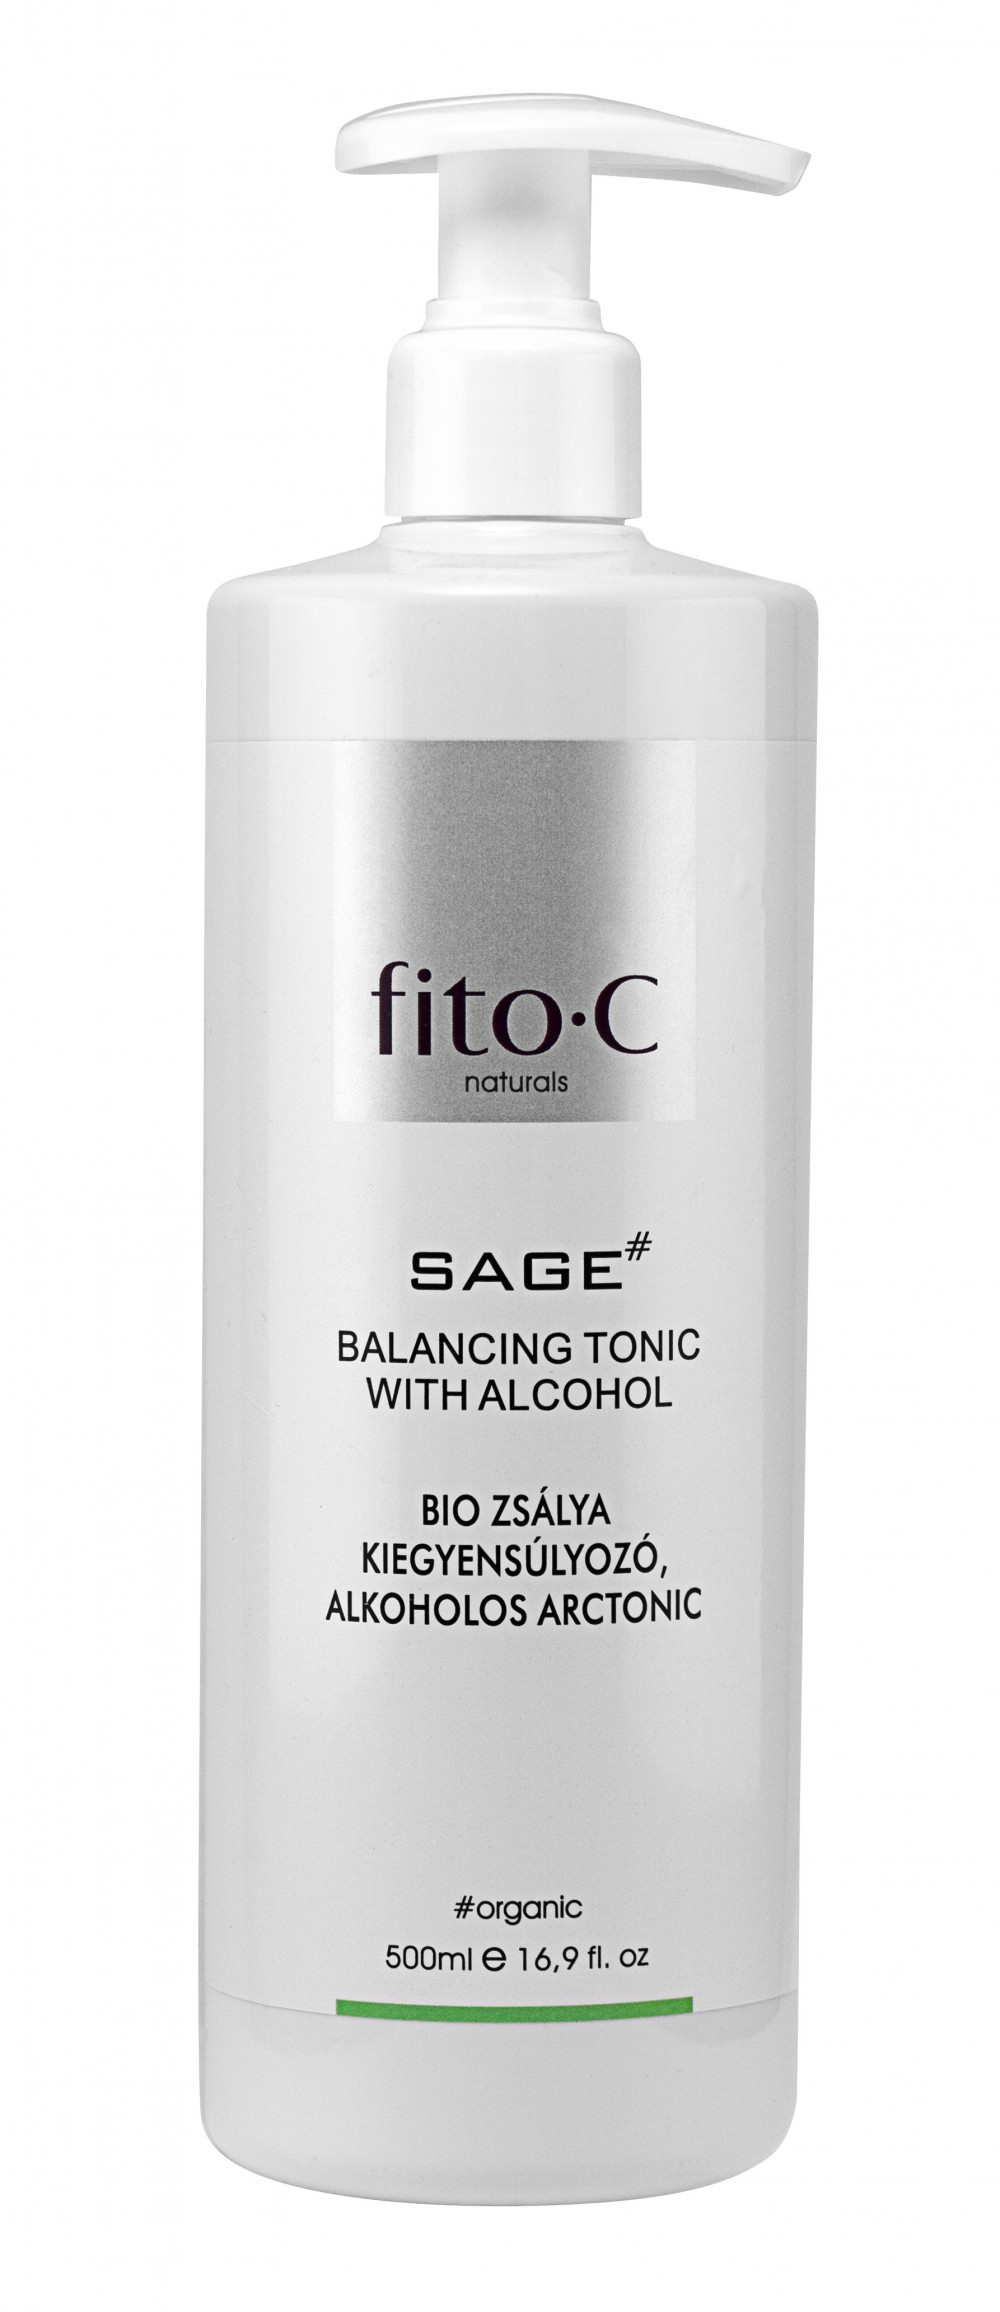 fito.C - Sage Balancing Tonic with Alcohol - Bio Zsálya Alkoholos Tonik, 500ml